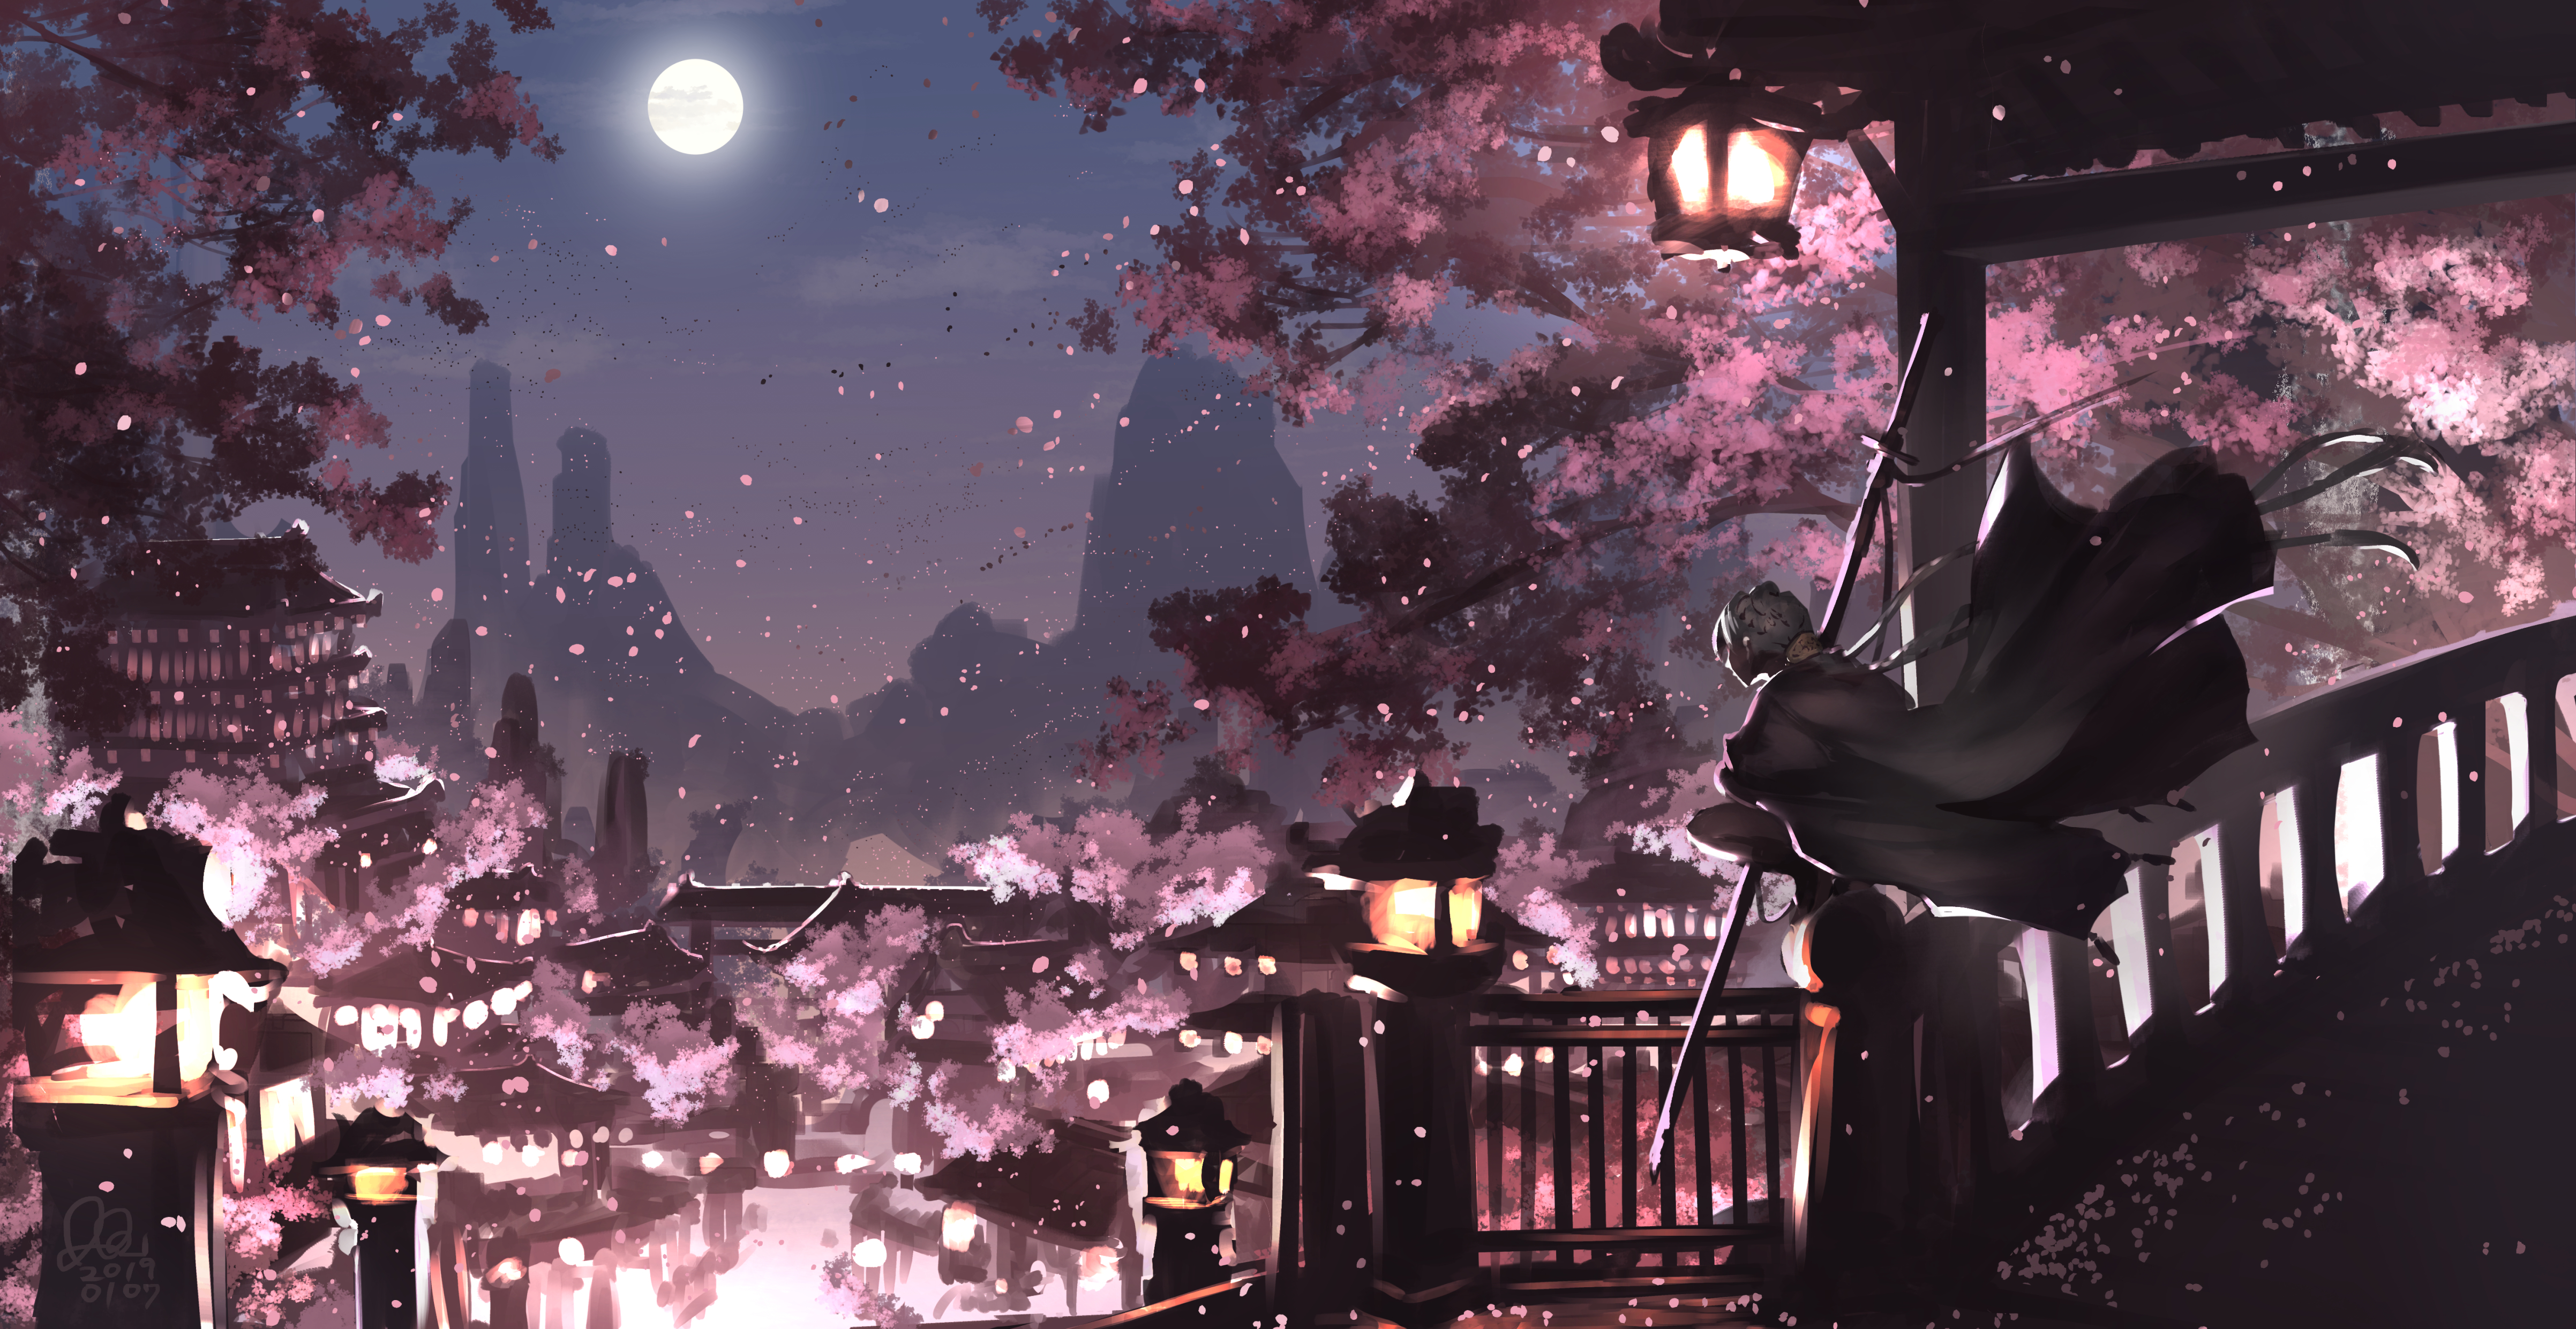 HD desktop wallpaper Anime Moon City download free picture 996610